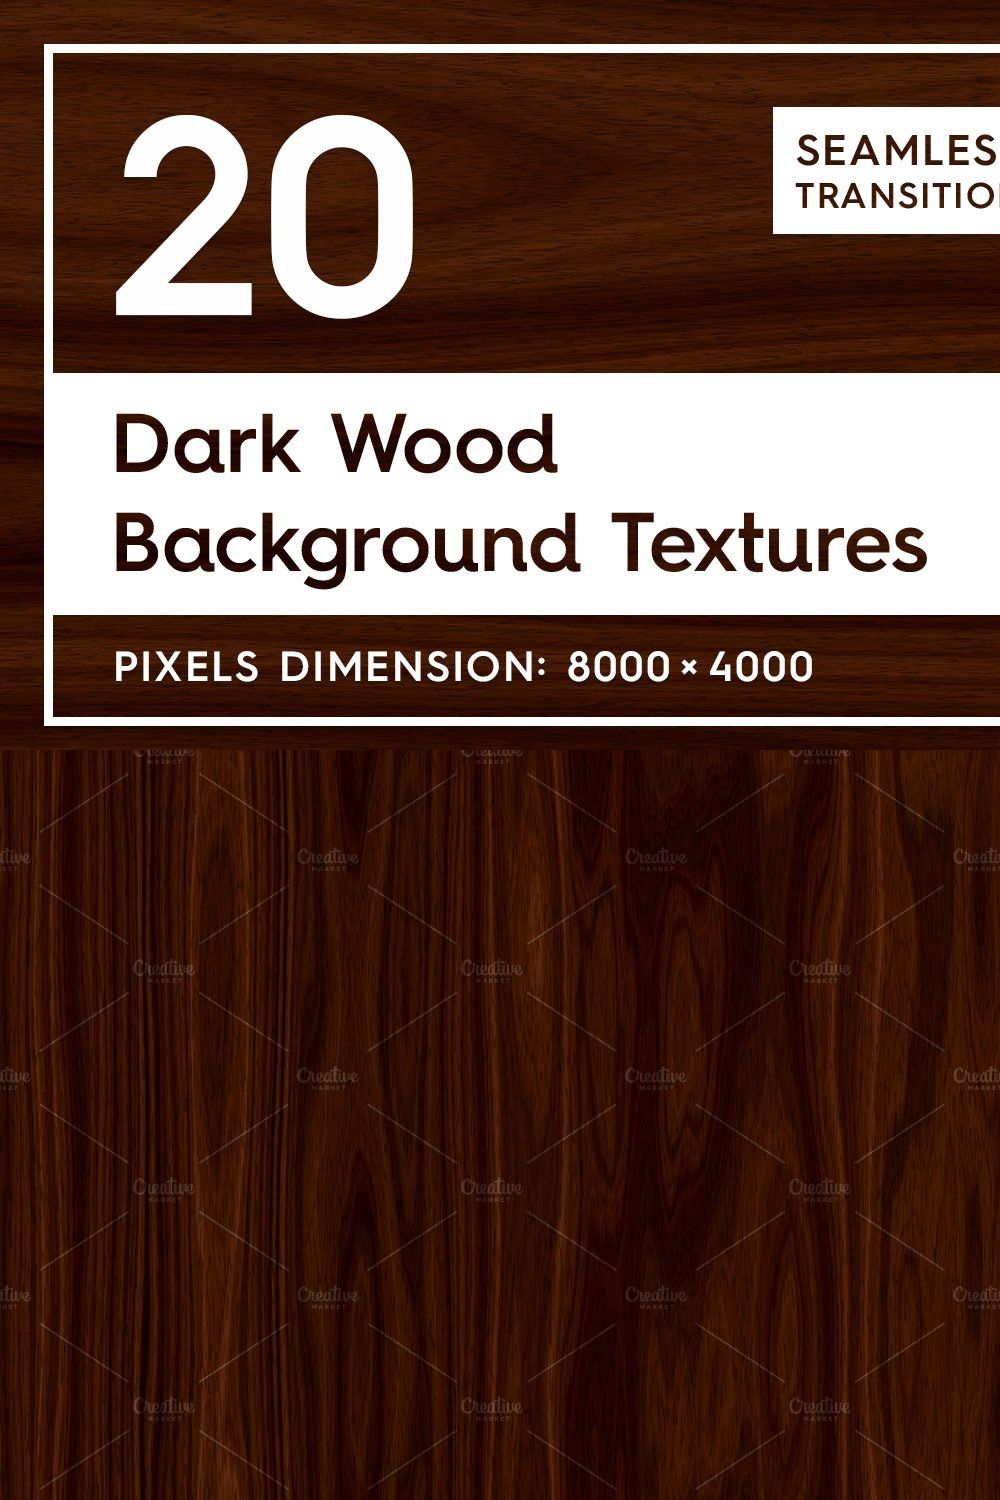 20 Dark Wood Background Textures pinterest preview image.